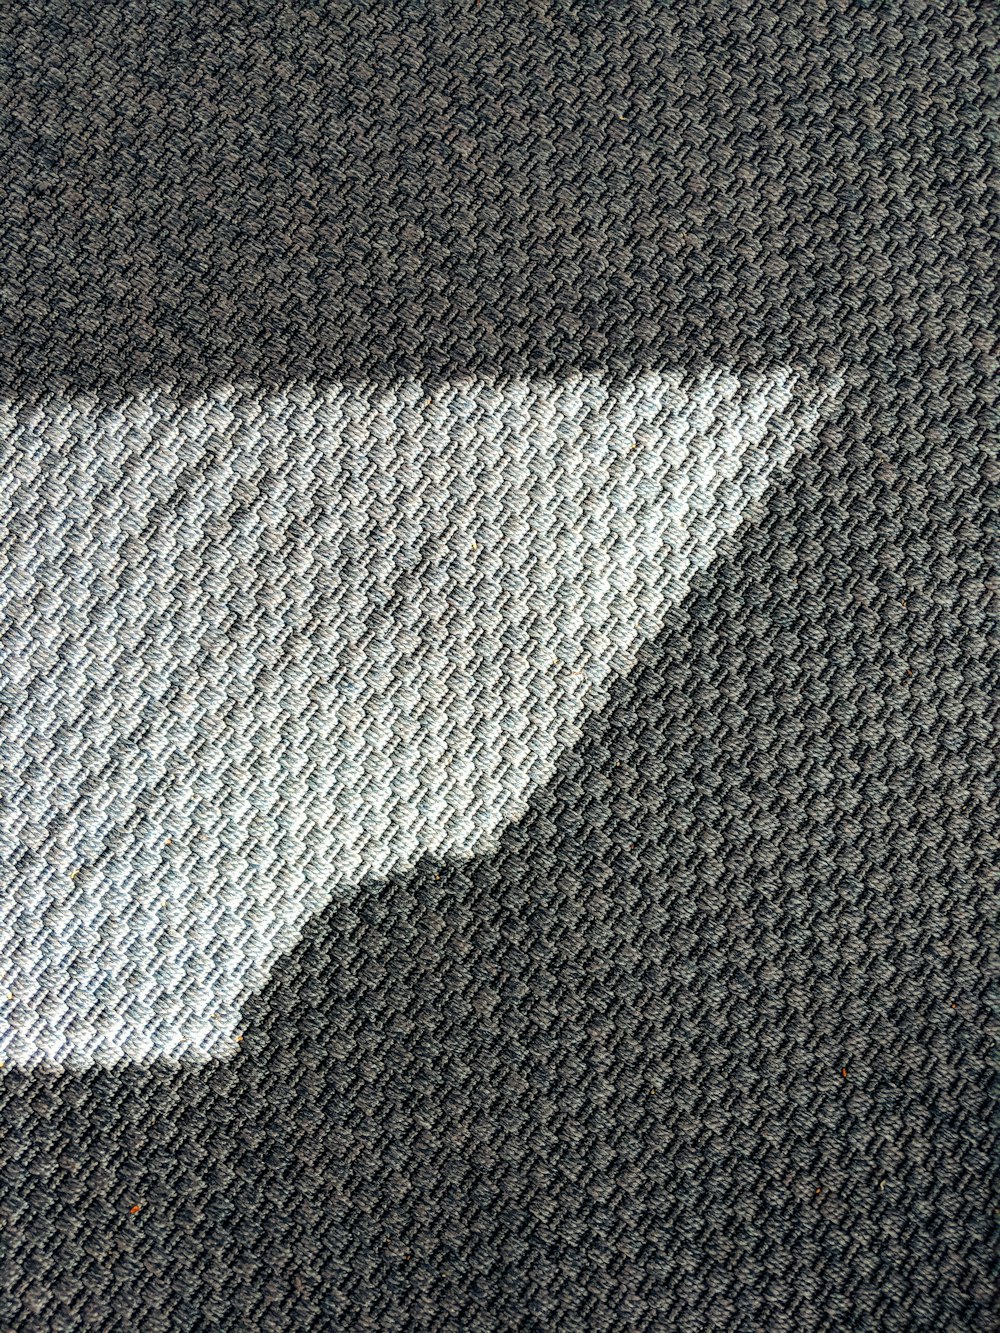 gray textile